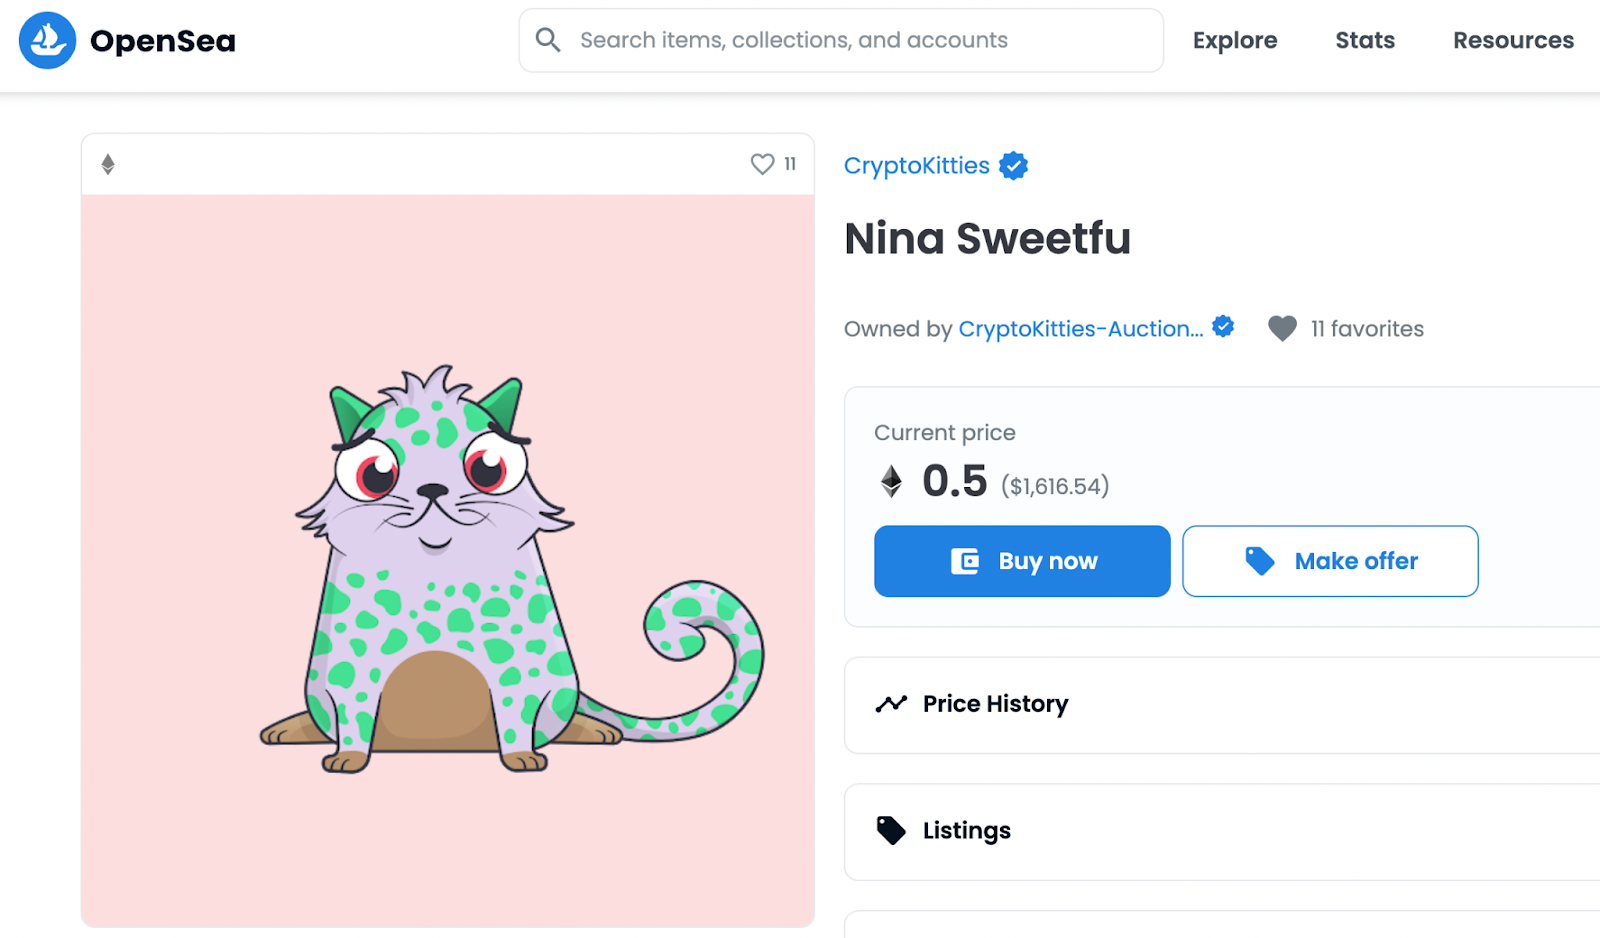 A Crypto Kitties NFT for sale on OpenSea.